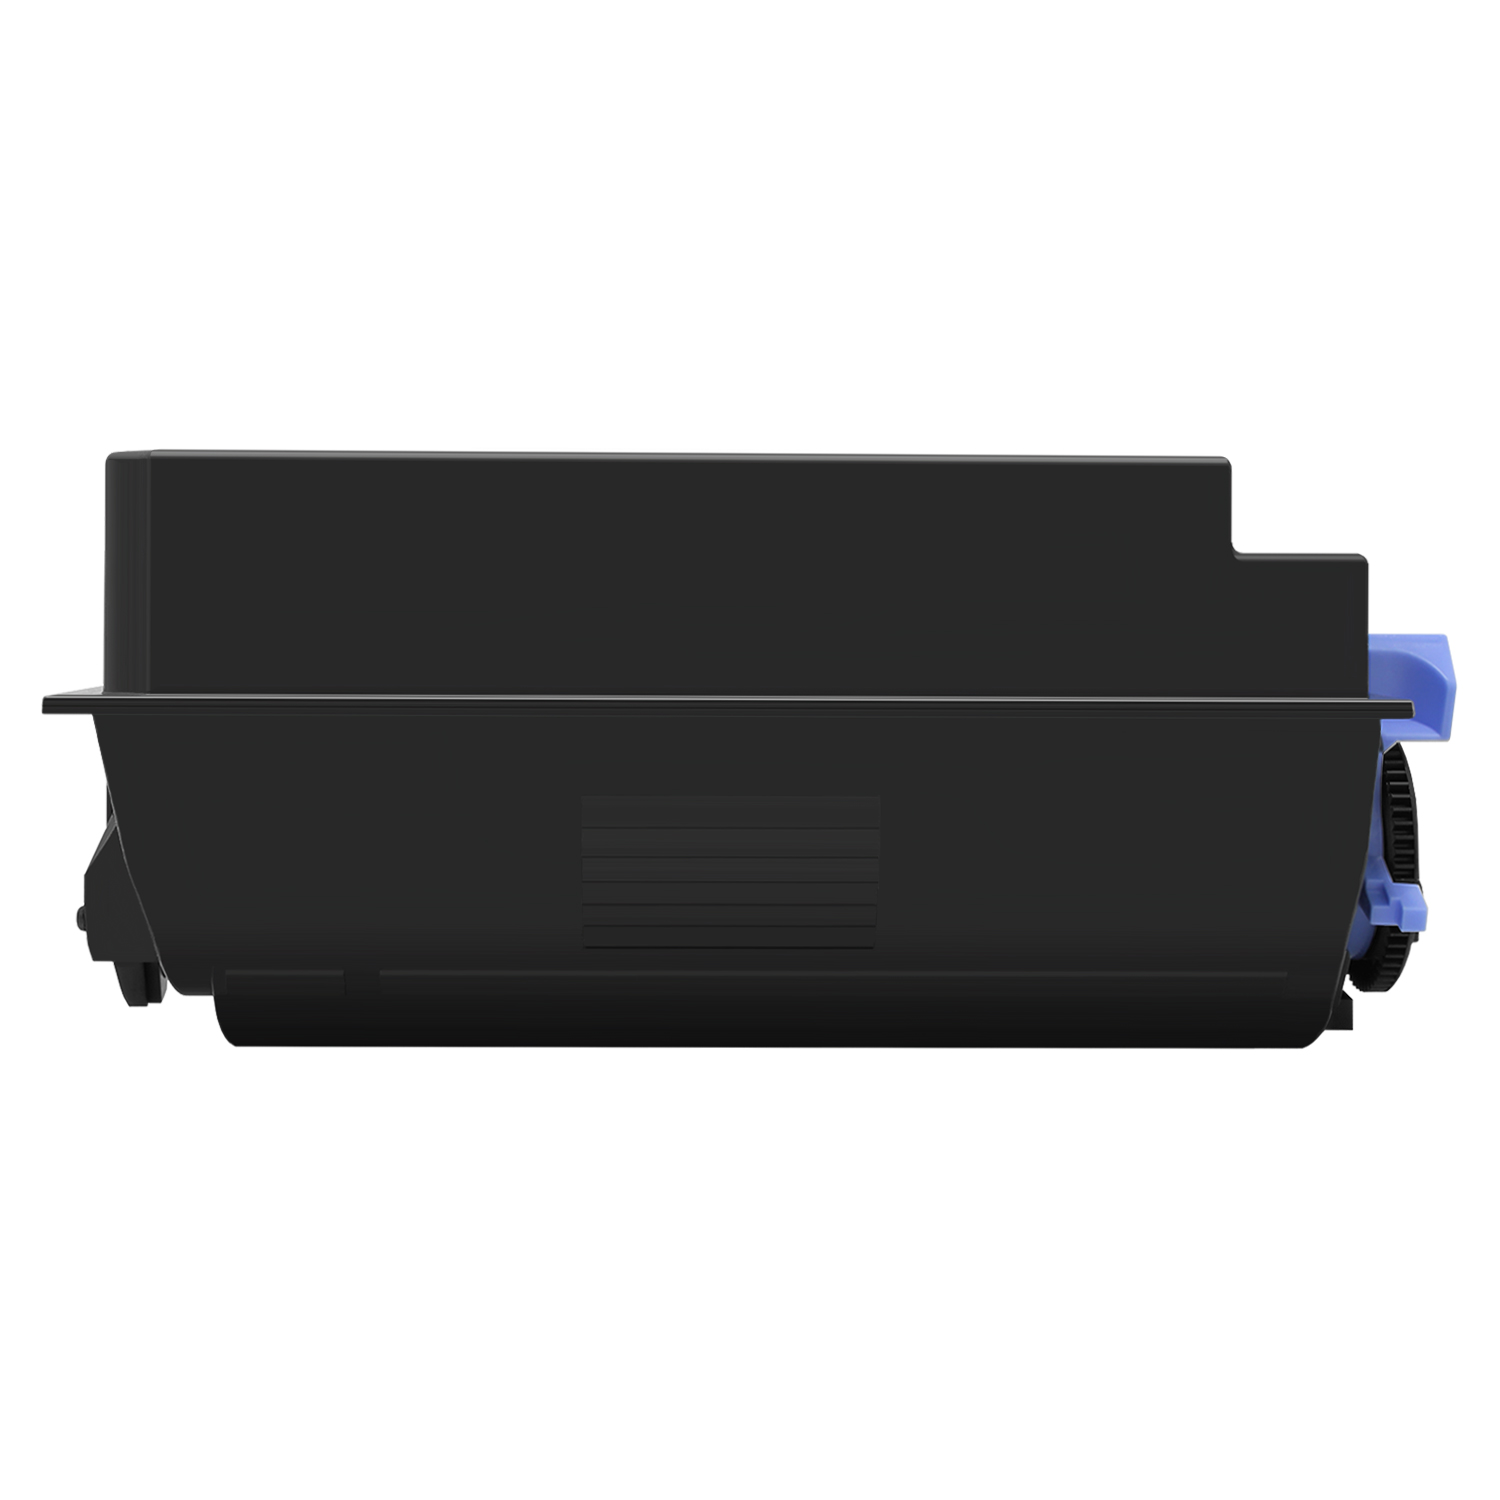 Cartridgeweb Toner kompatibel zu Kyocera/Mita 1T02LV0NL0 TK3130 schwarz 25.000 Seiten